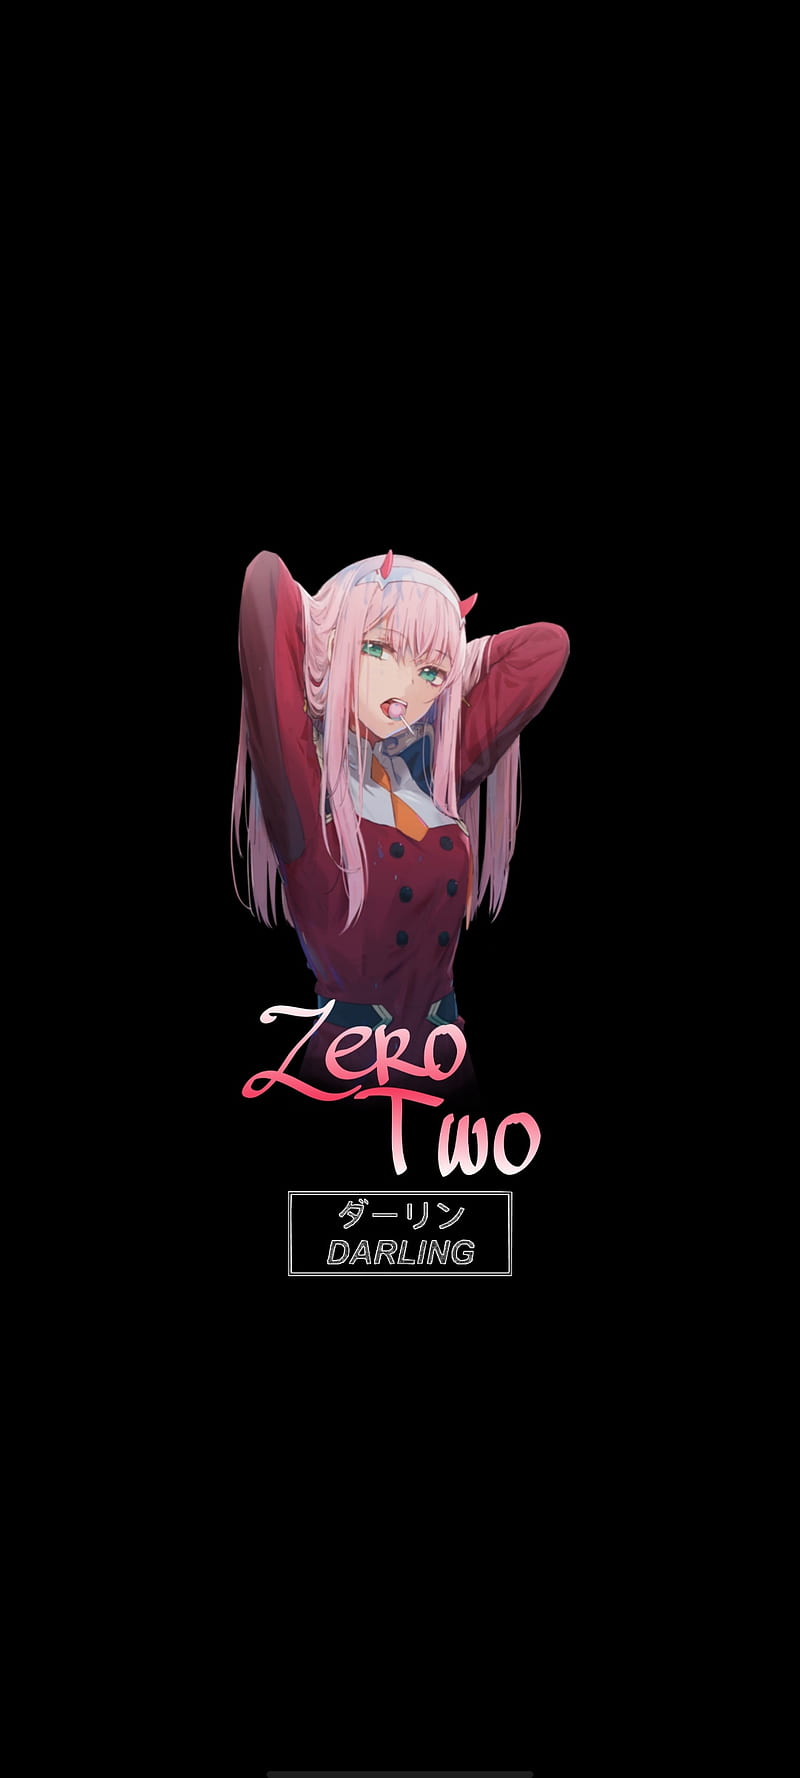 Anime wallpapers - Zero two - Wattpad